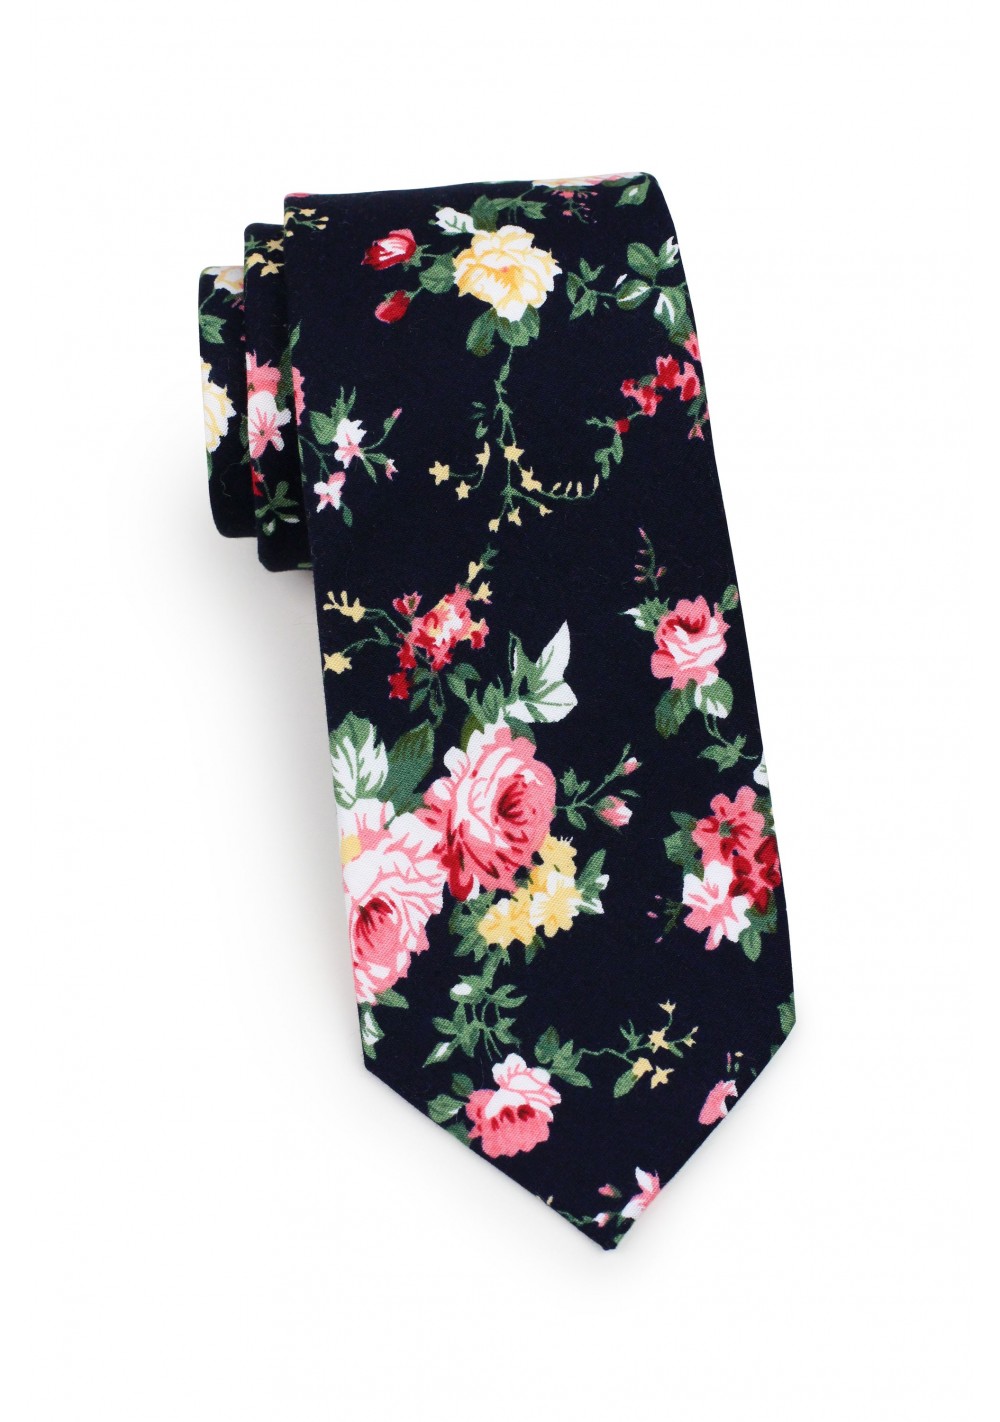 Black and Pink Cotton Tie Set | Slim Cut Tie in Black with Pink Roses ...